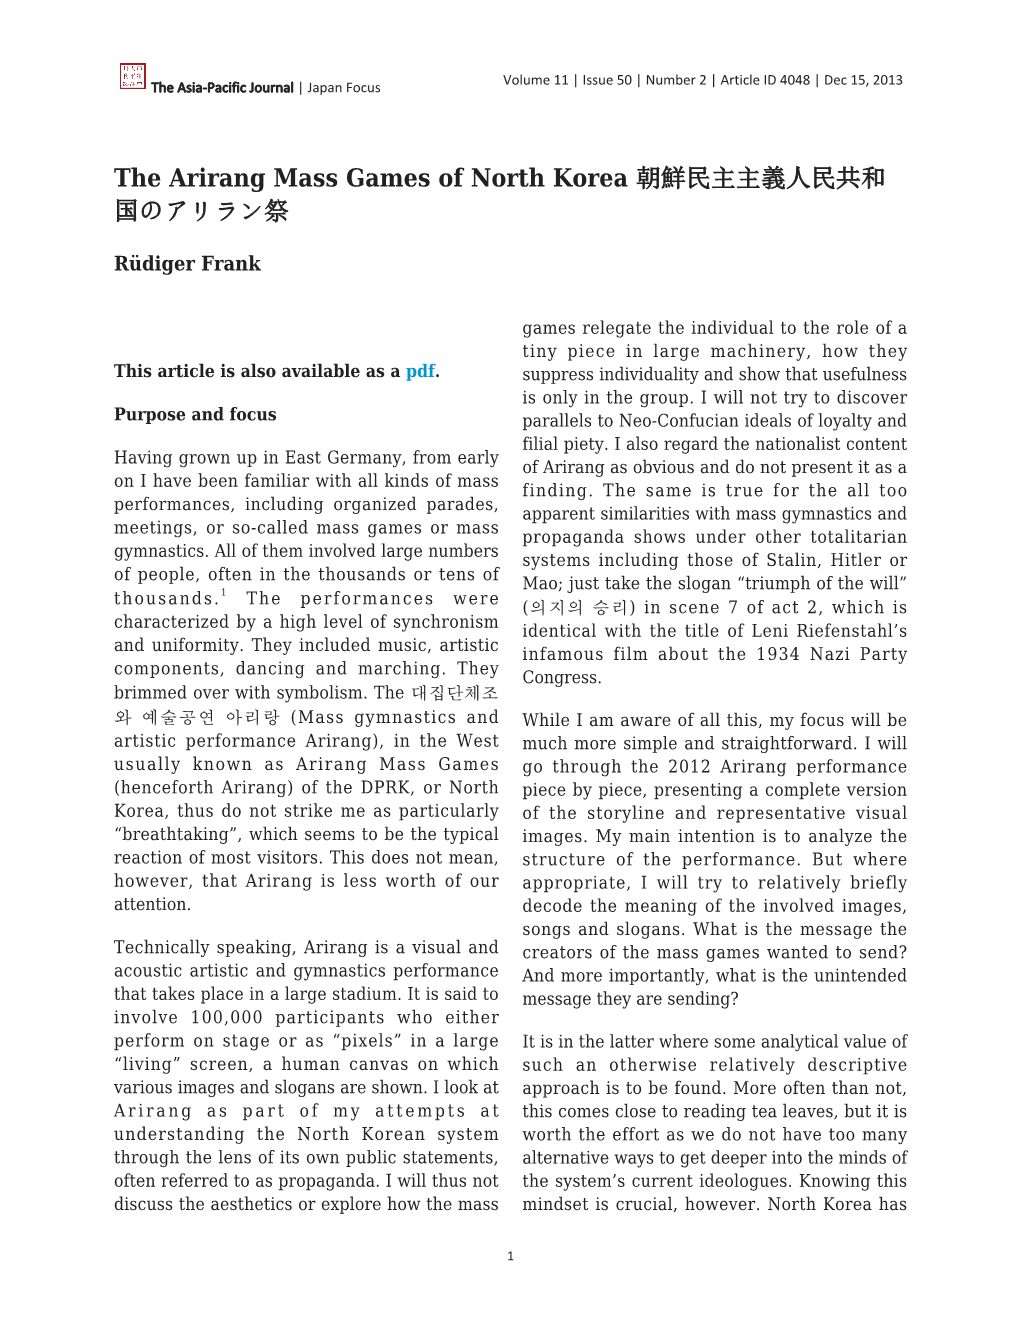 The Arirang Mass Games of North Korea 朝鮮民主主義人民共和 国のアリラン祭